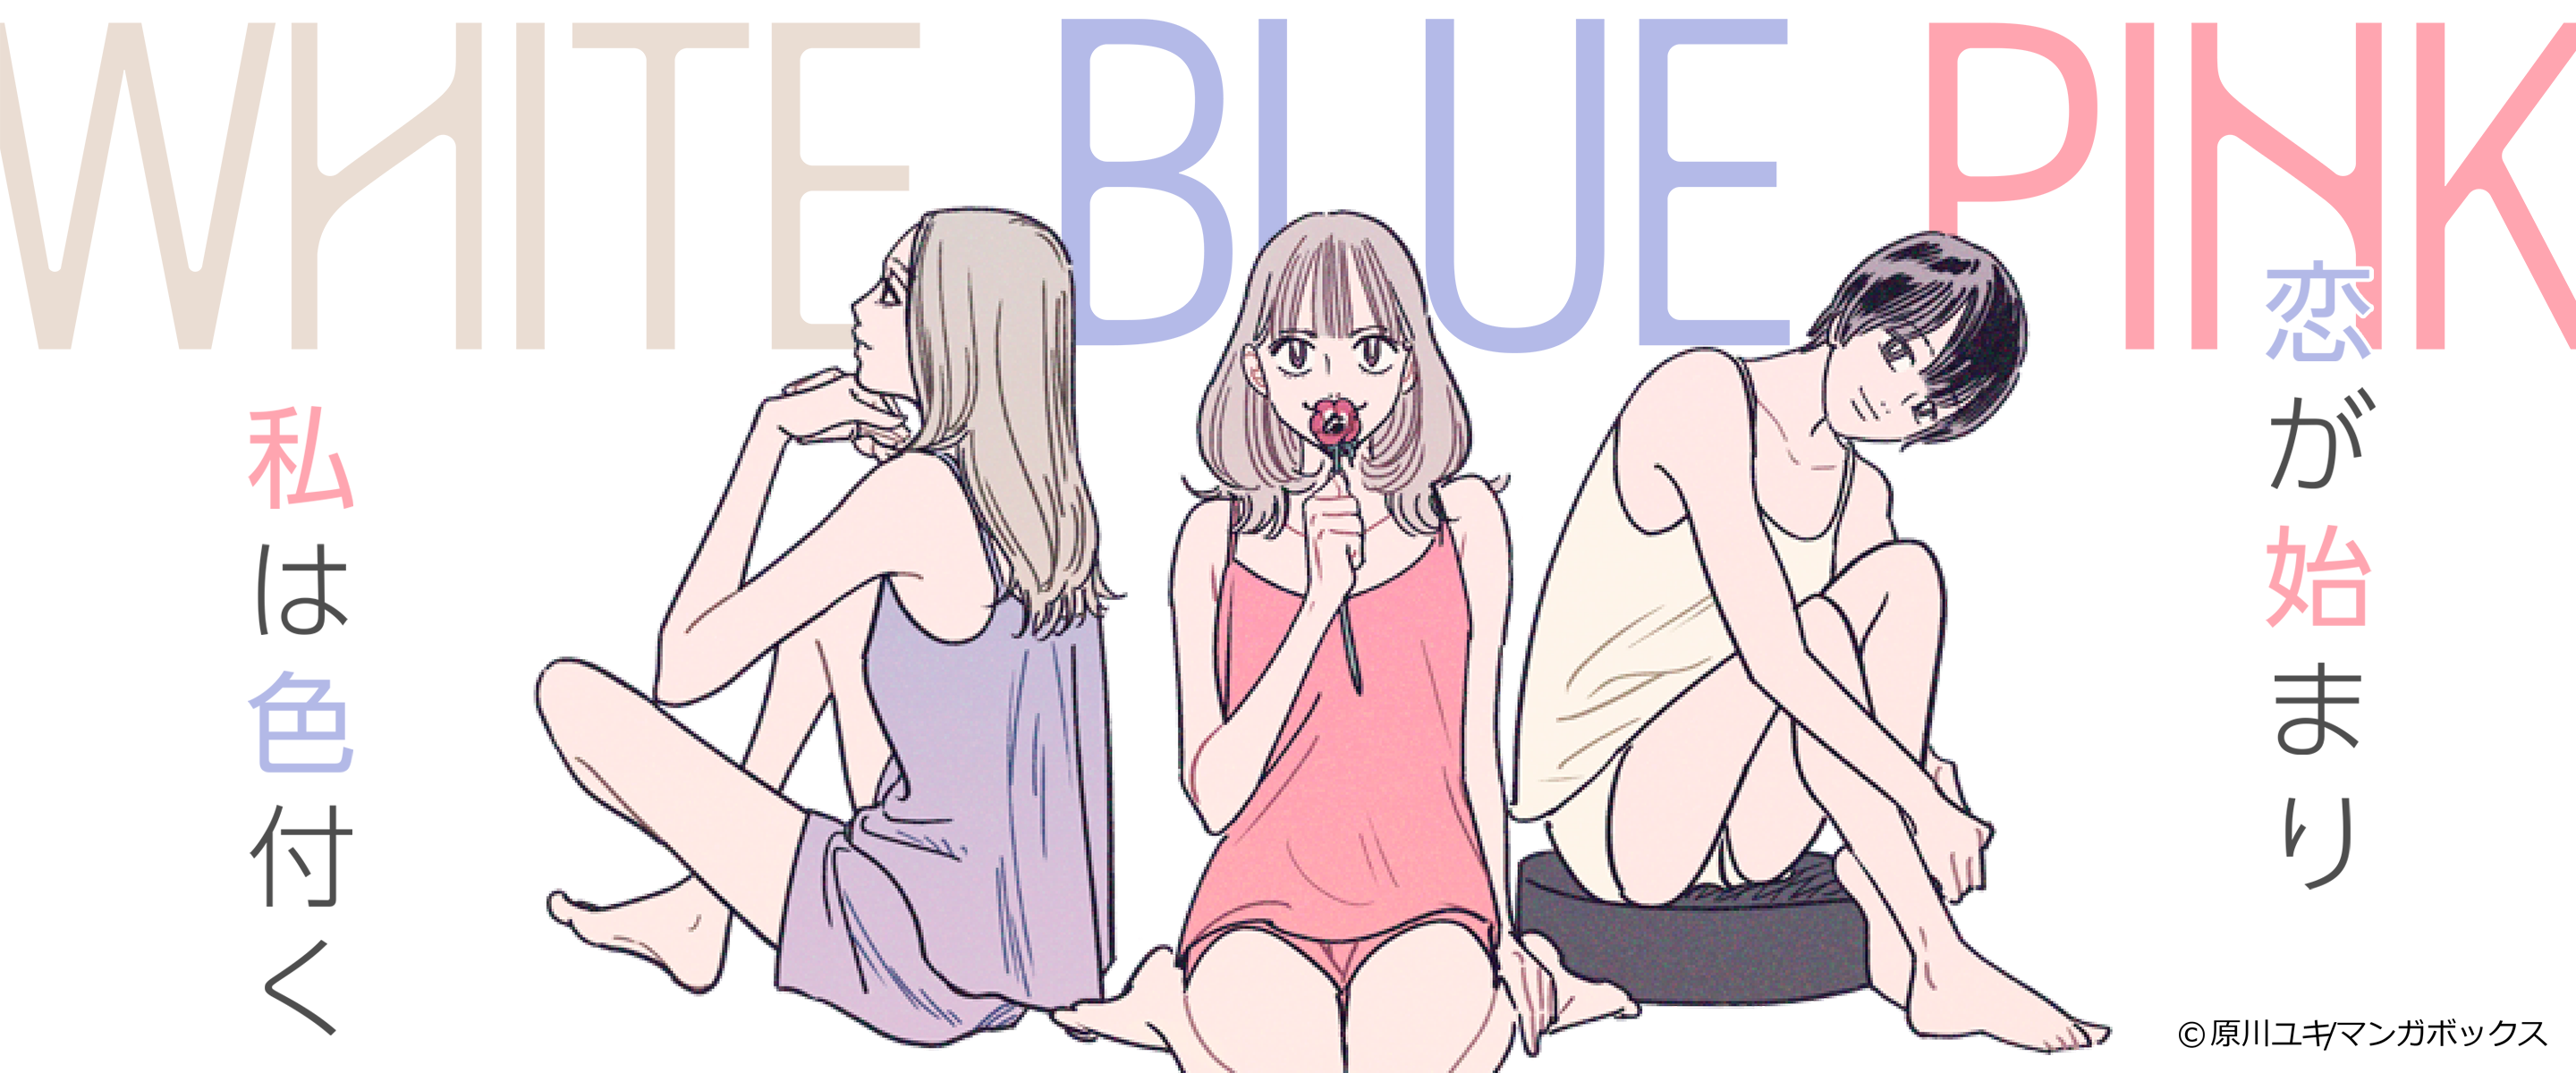 【新連載】WHITE BLUE PINK